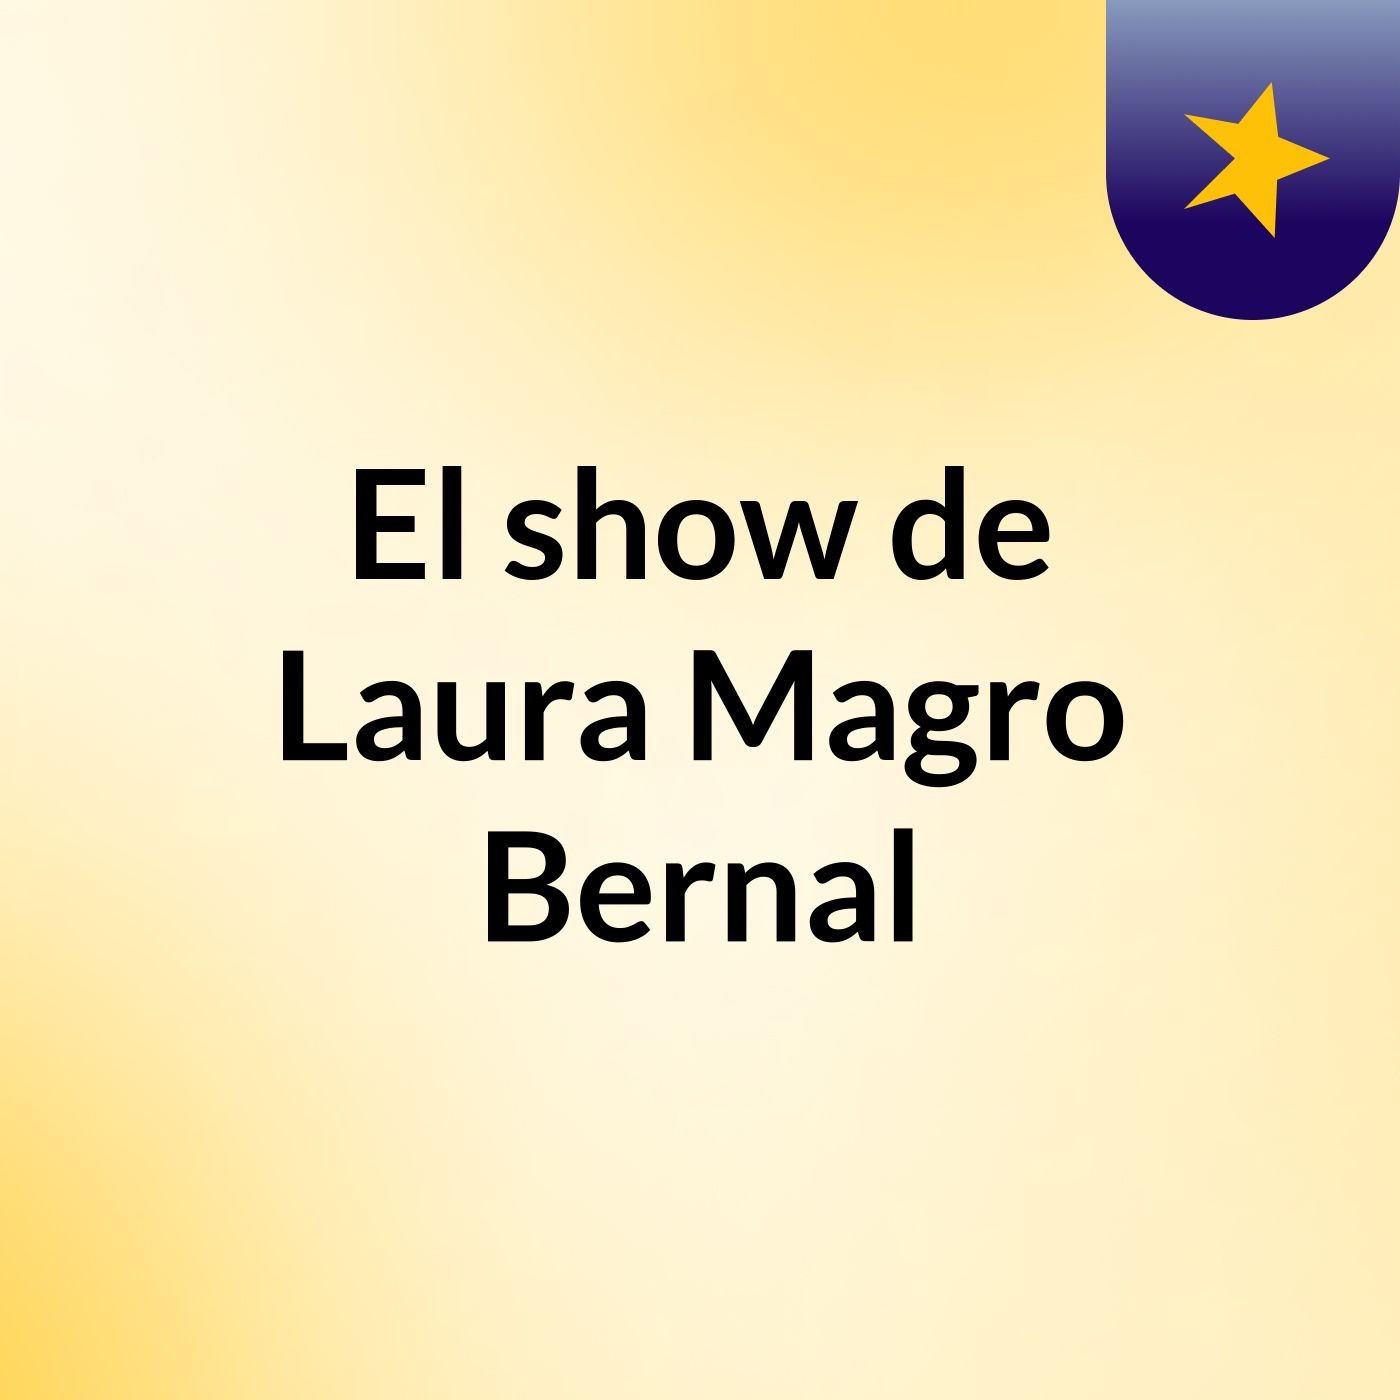 Episodio 5 - El show de Laura Magro Bernal